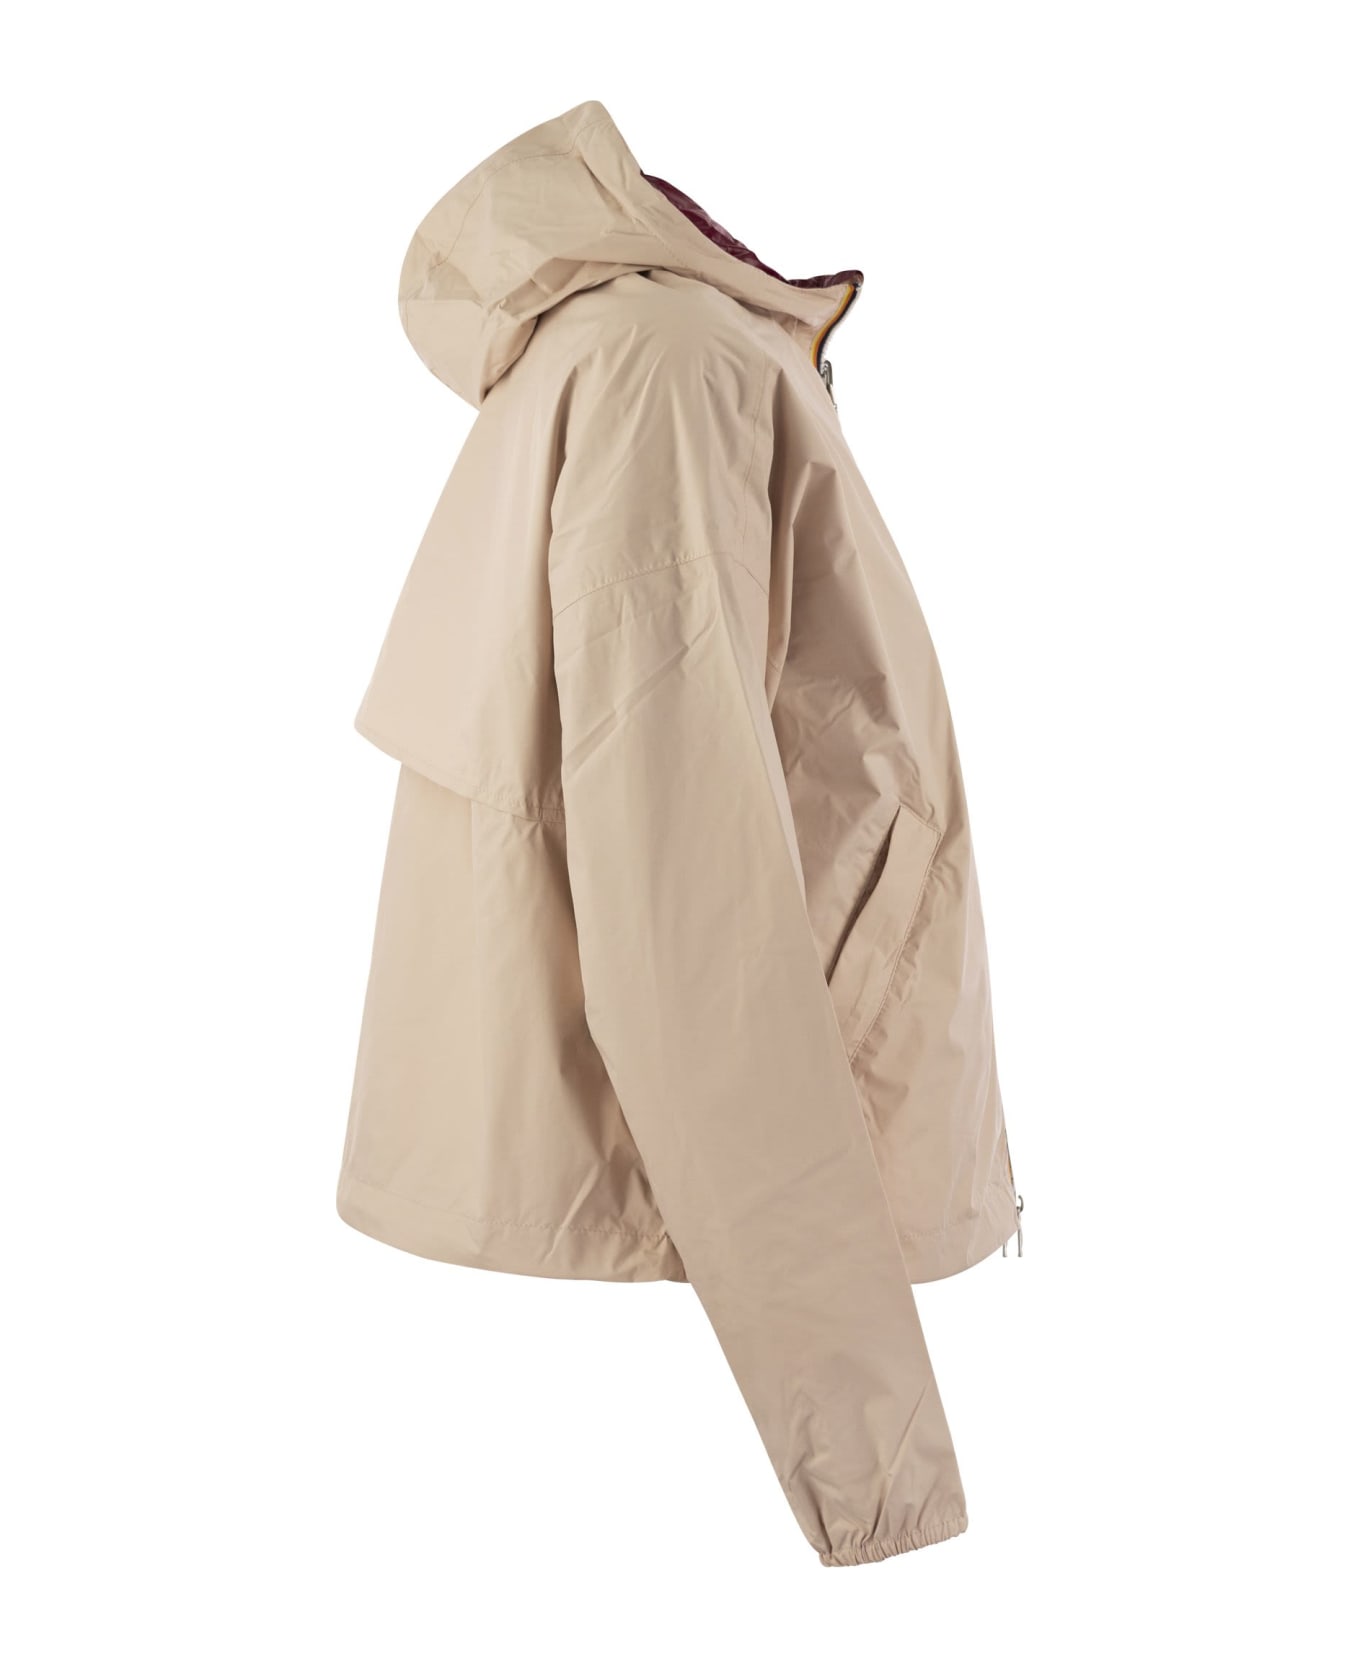 K-Way Laurette Plus - Reversible Hooded Jacket - Peach/bordeaux ジャケット